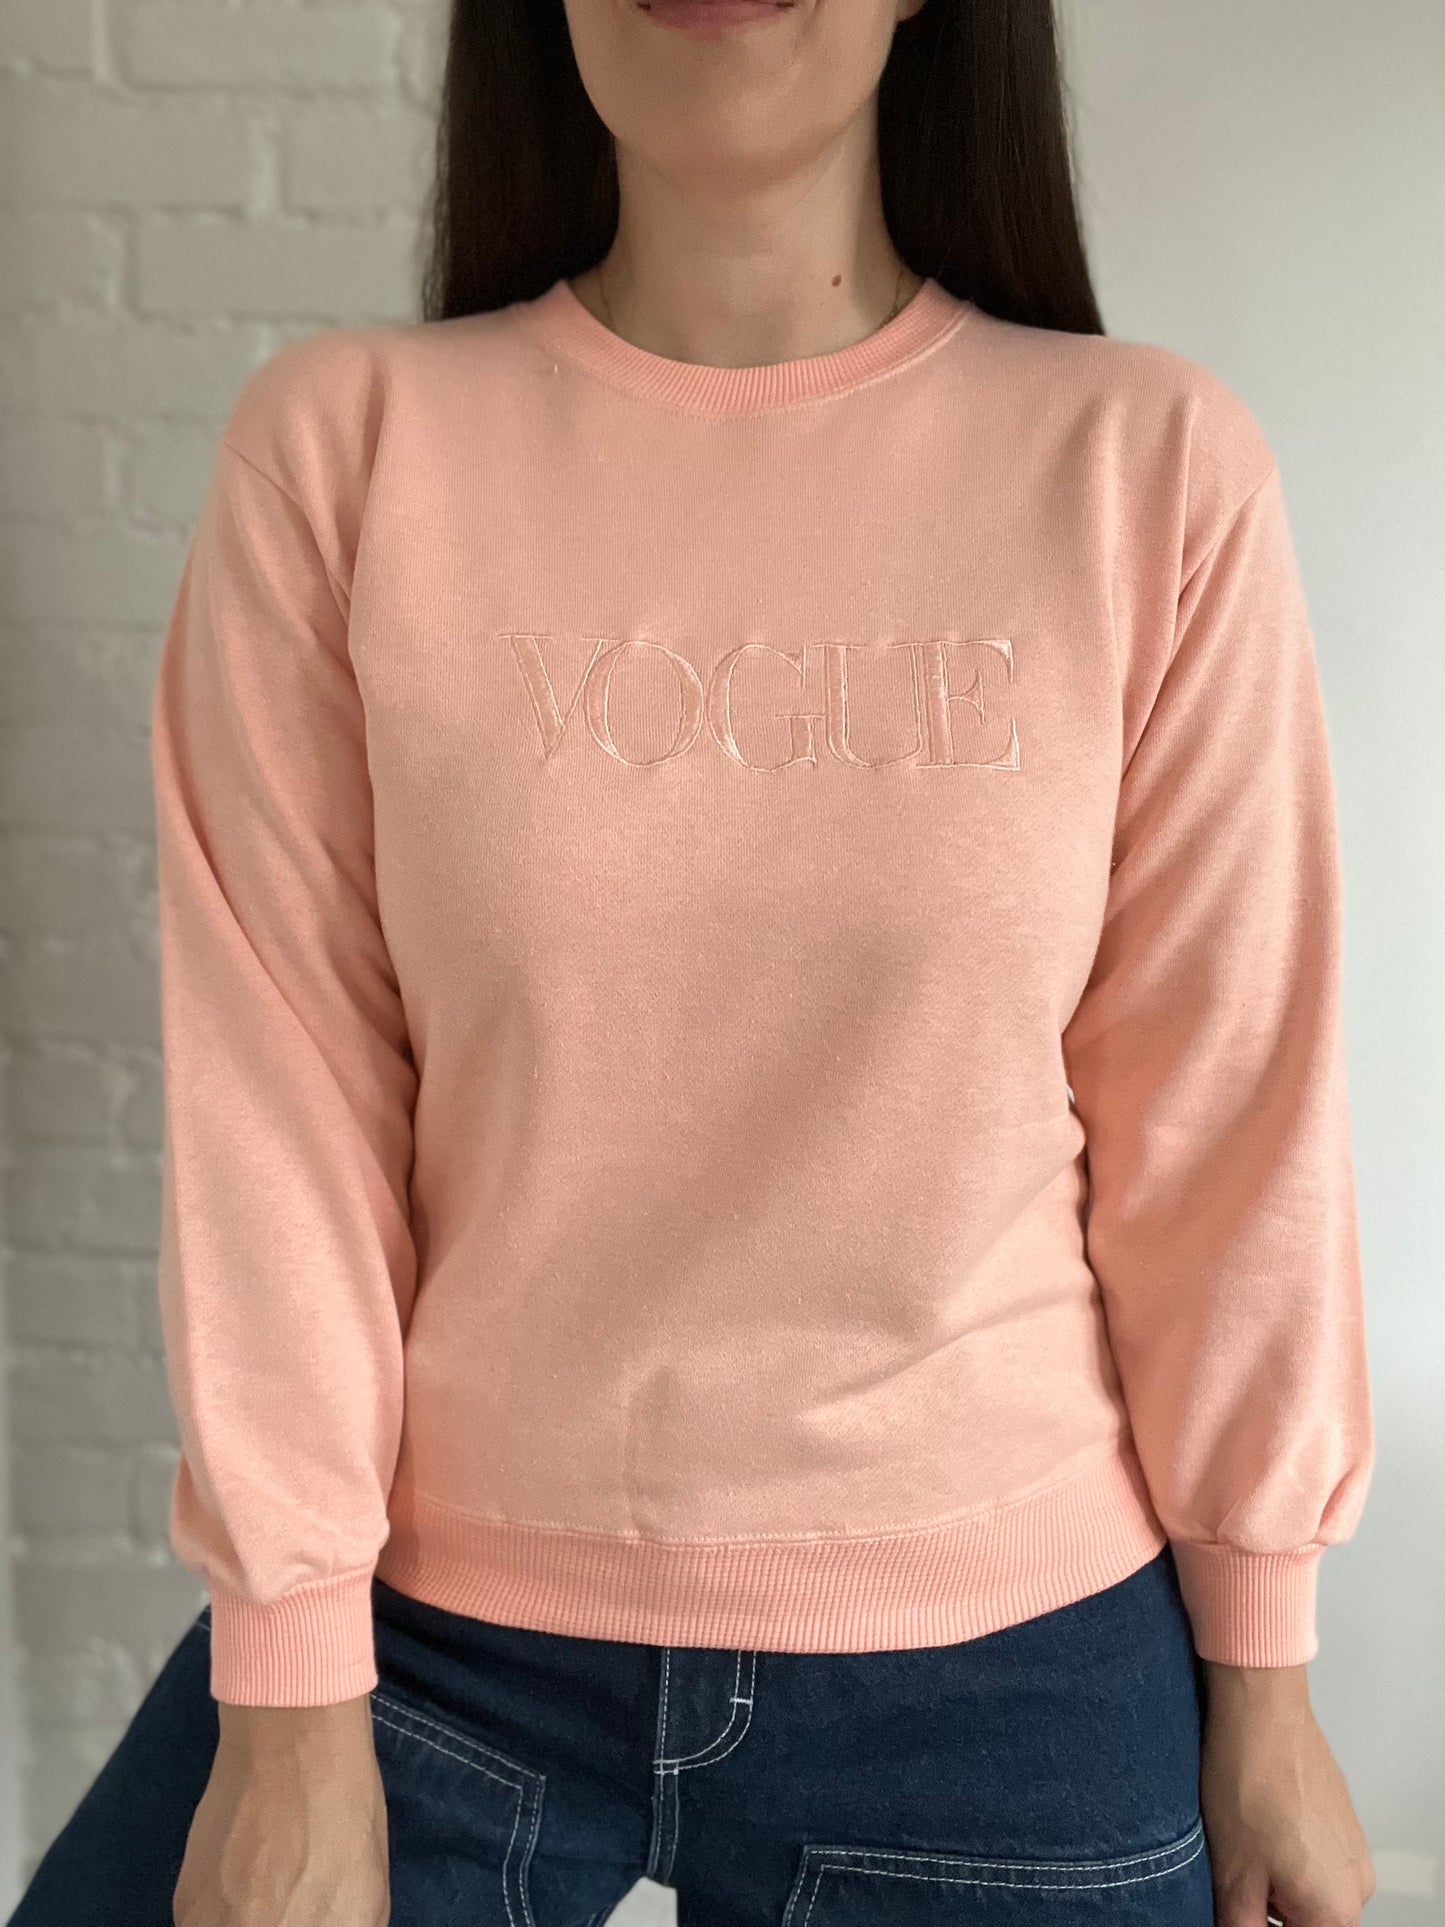 VOGUE Crewneck Sweater - Size S/M